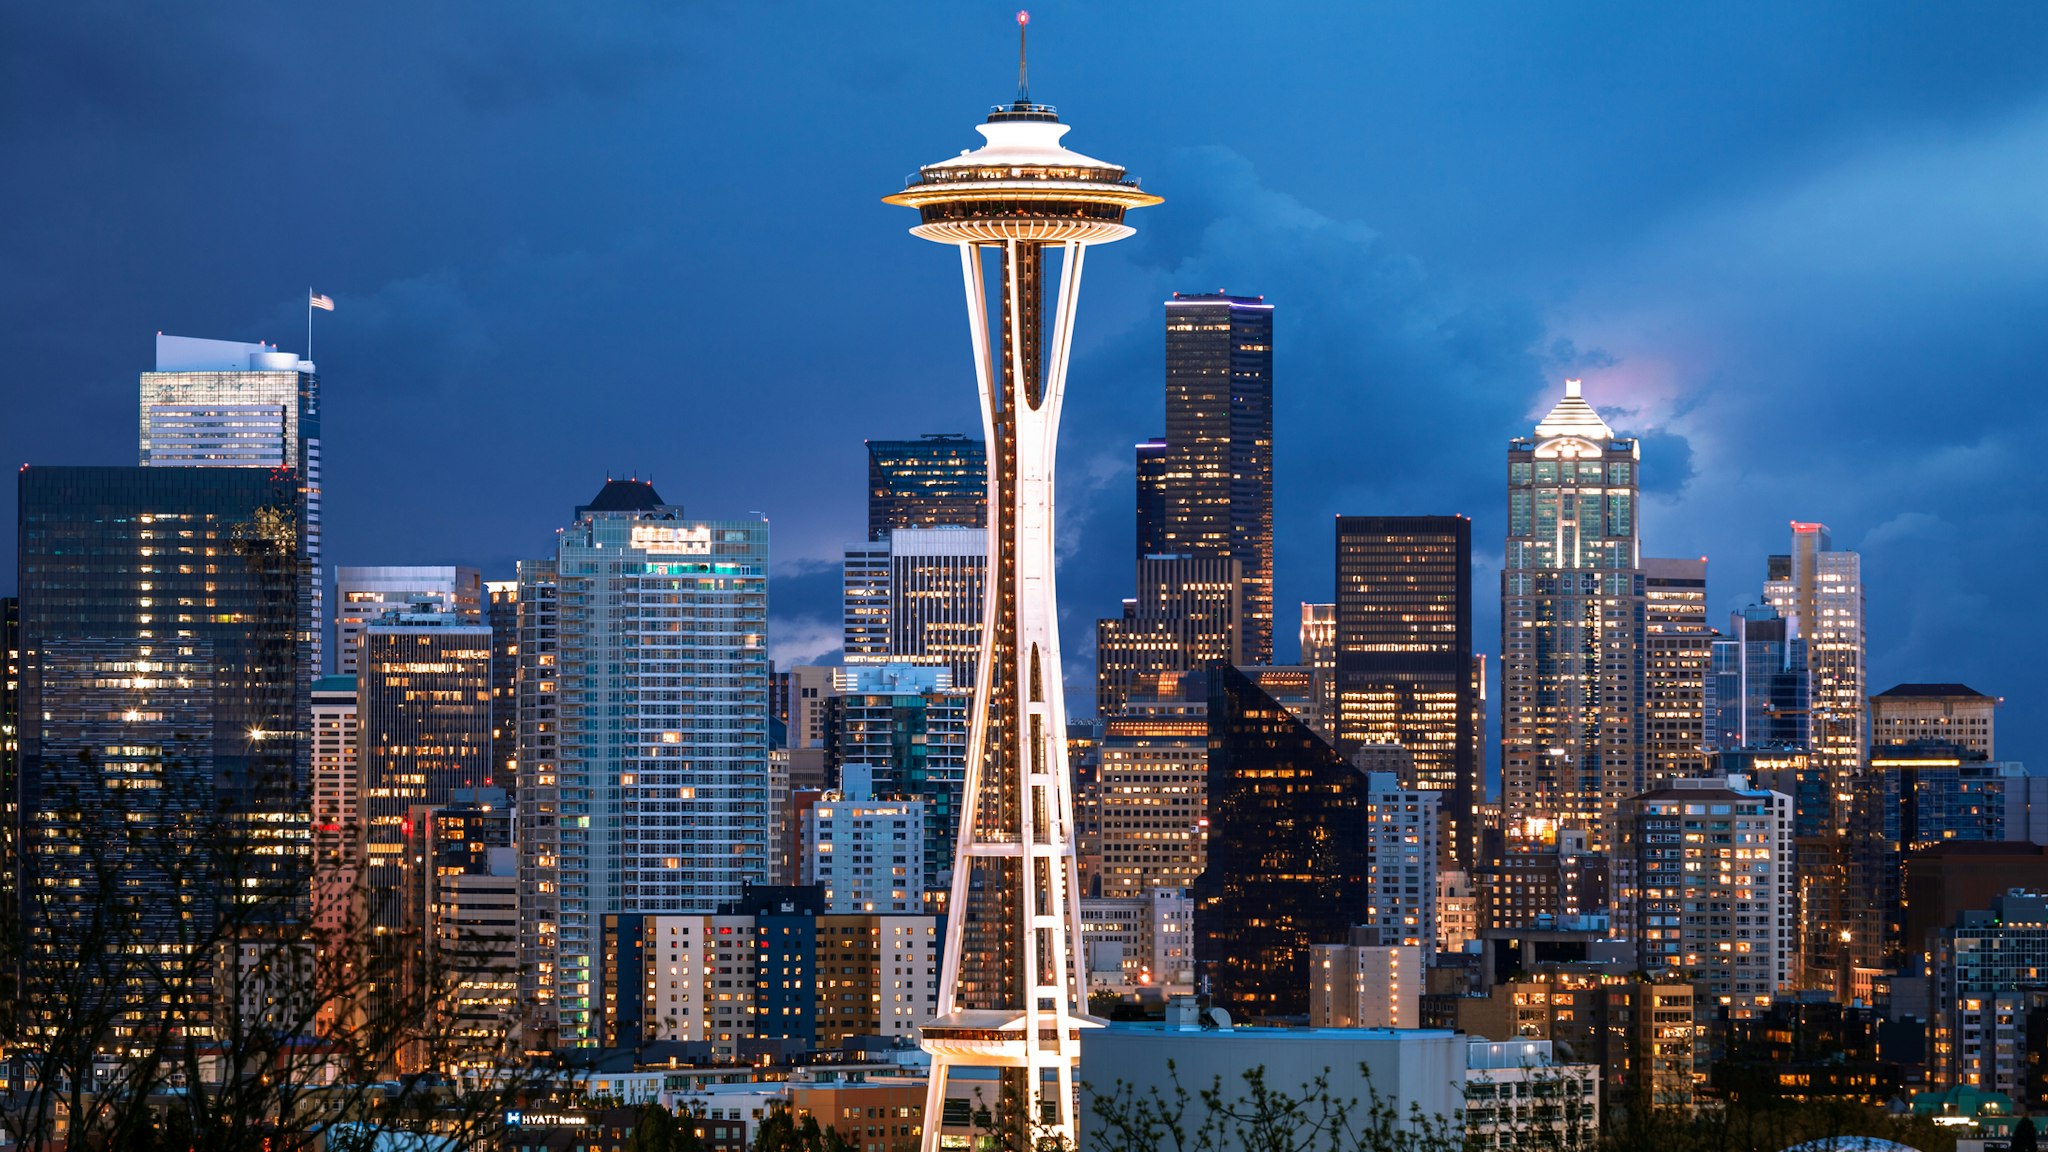 Stormy Sky, Space Needle, Seattle, Washington, America - stock photo